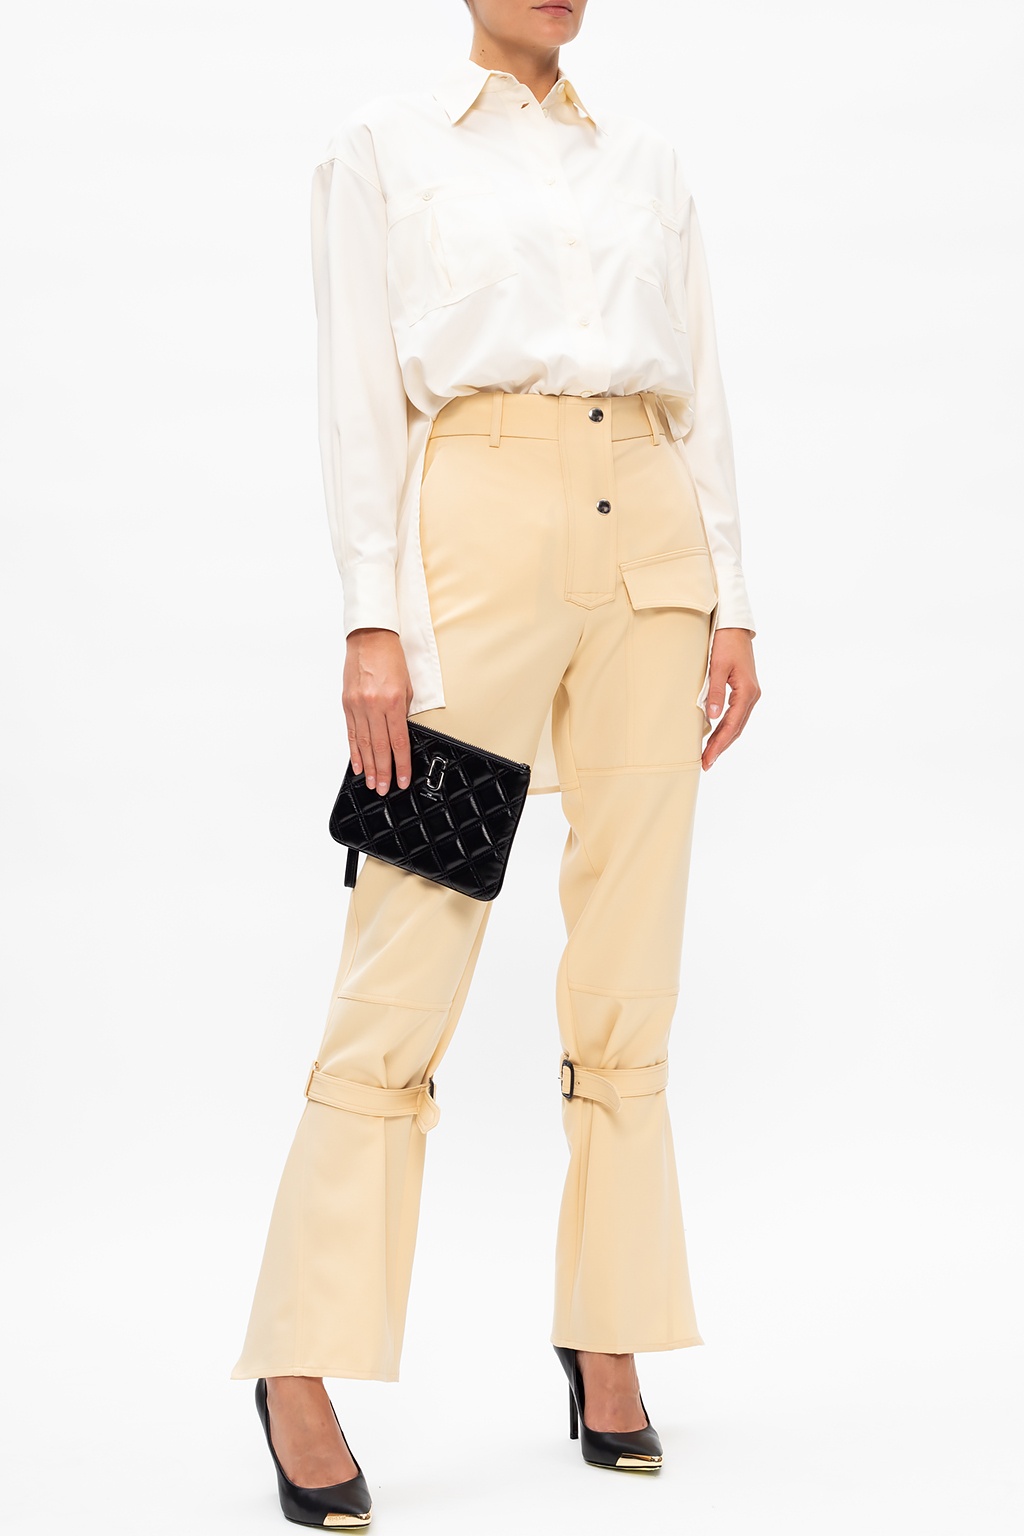 Victoria Beckham Wool trousers